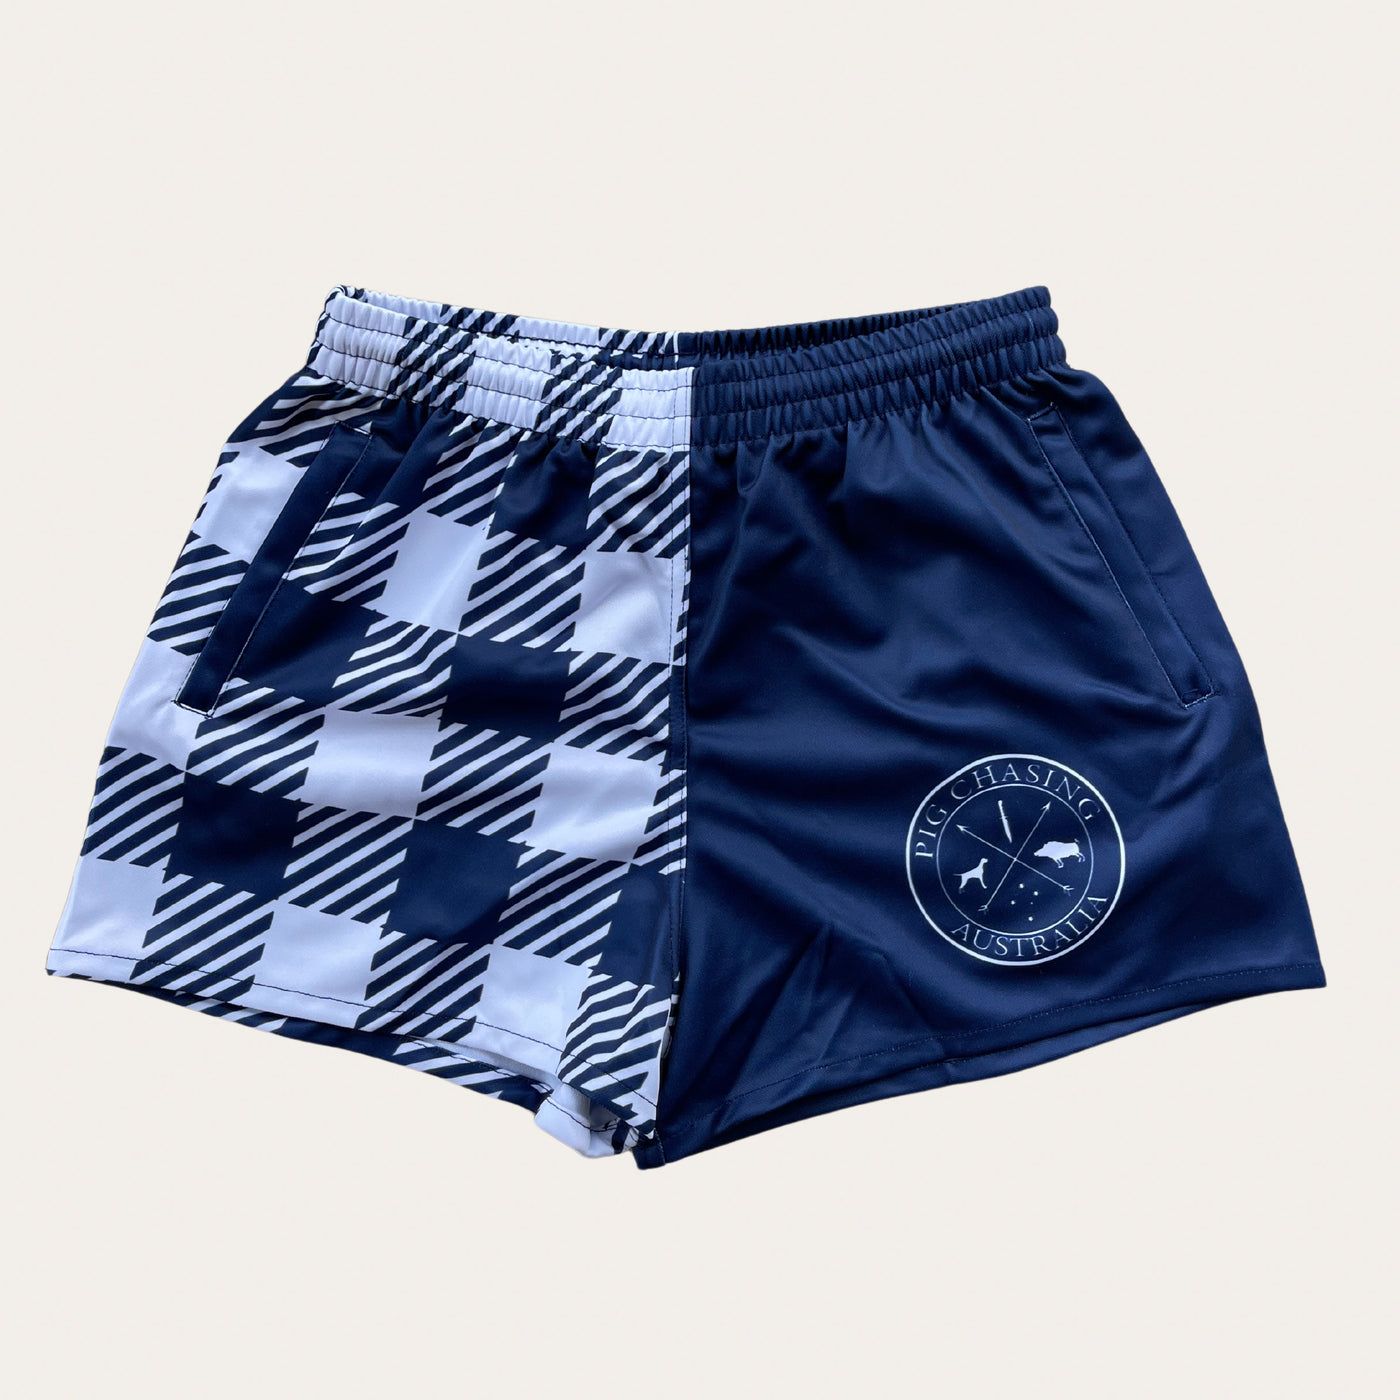 Gingham Footy Shorts - Navy - Zip Pockets